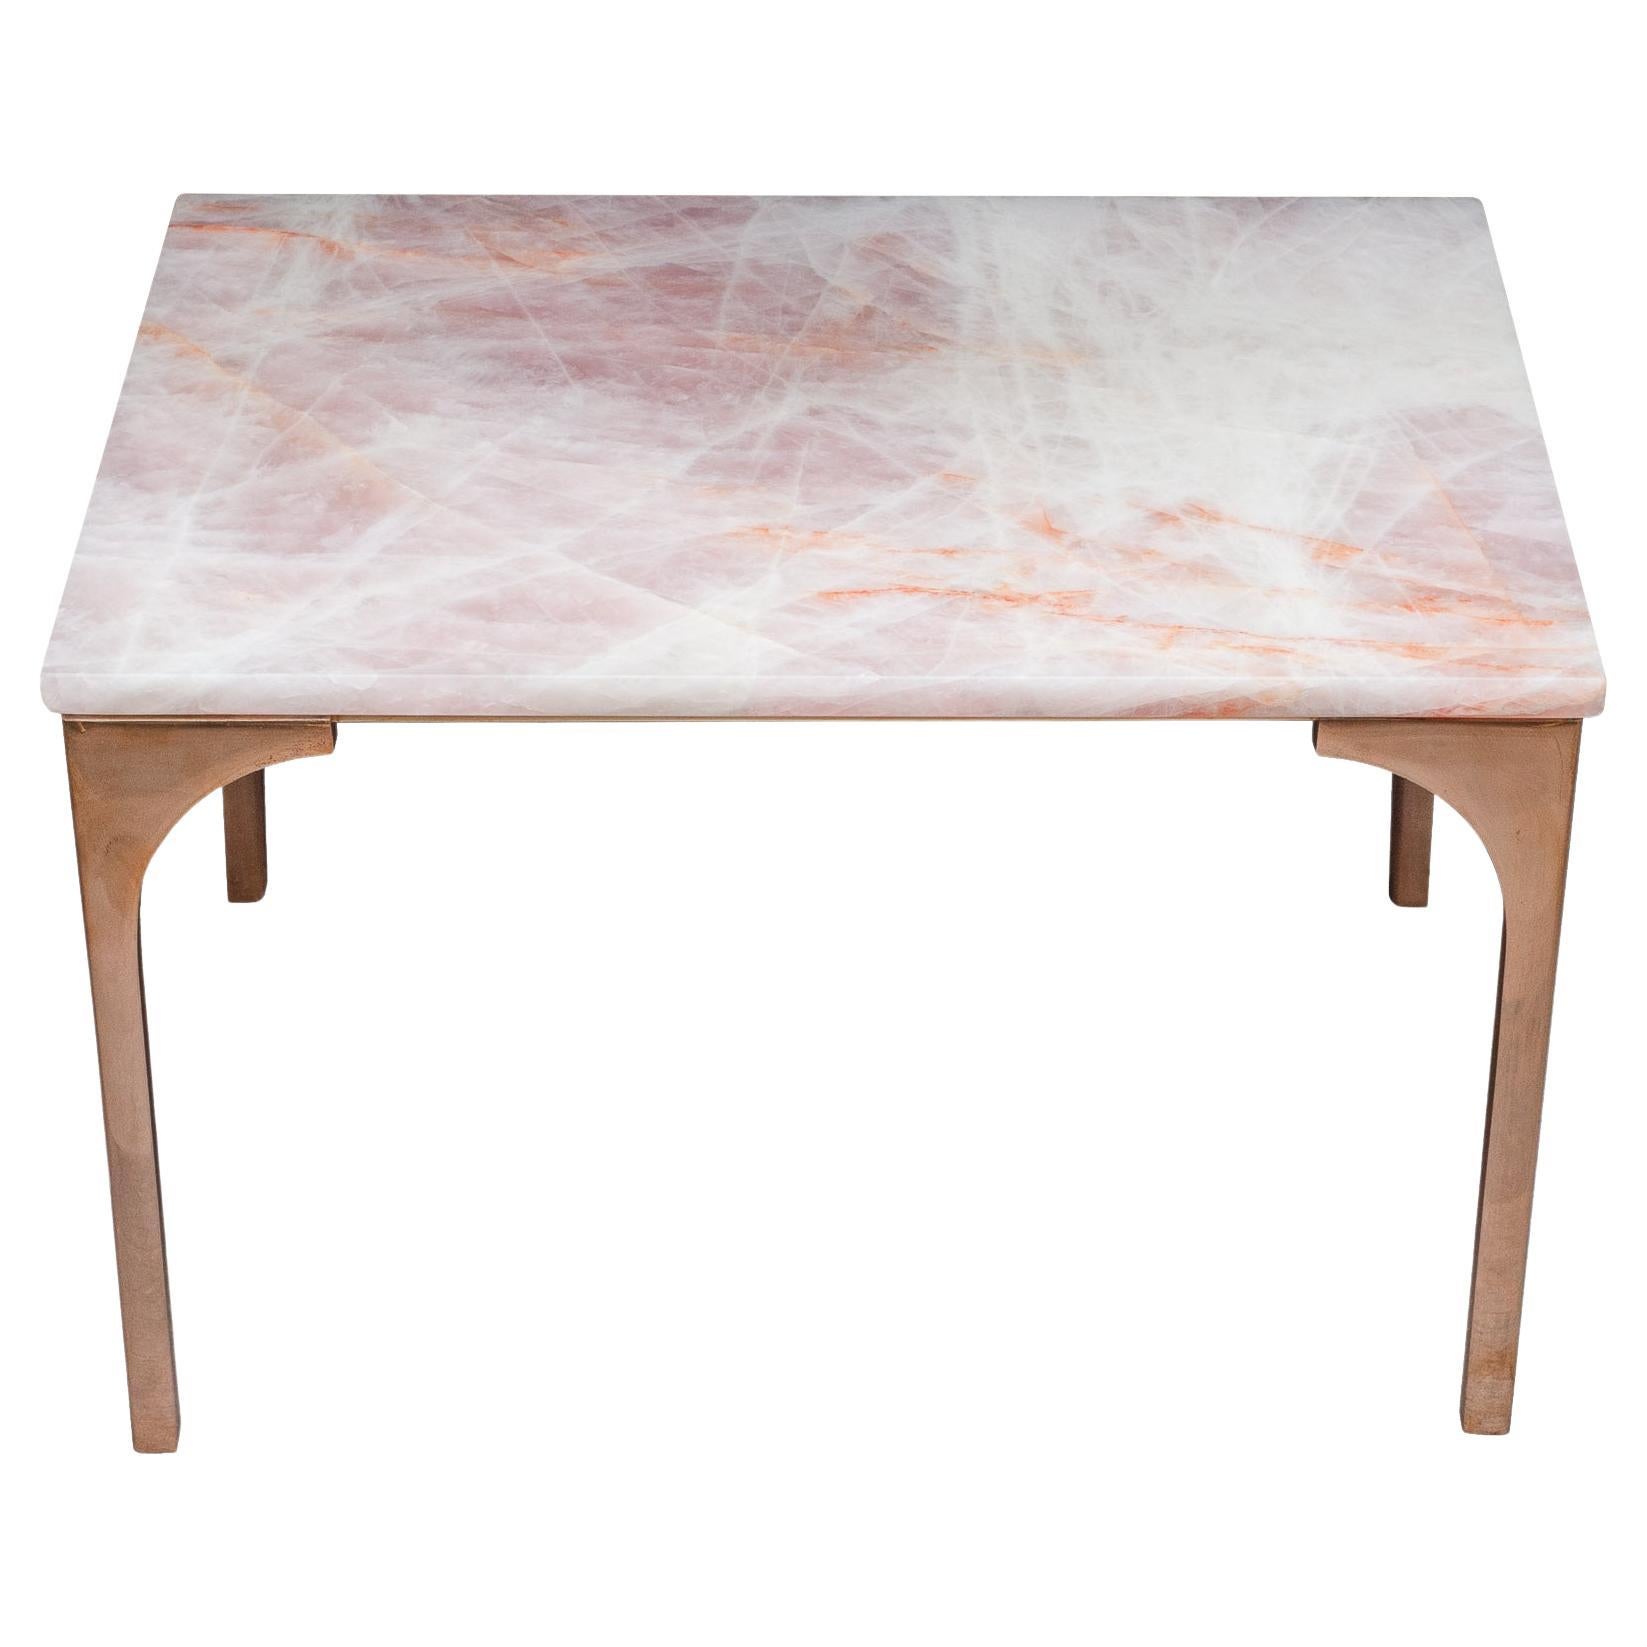 Studio Maison Nurita Pink Rose Quartz Table with Polished Poured Bronze Legs